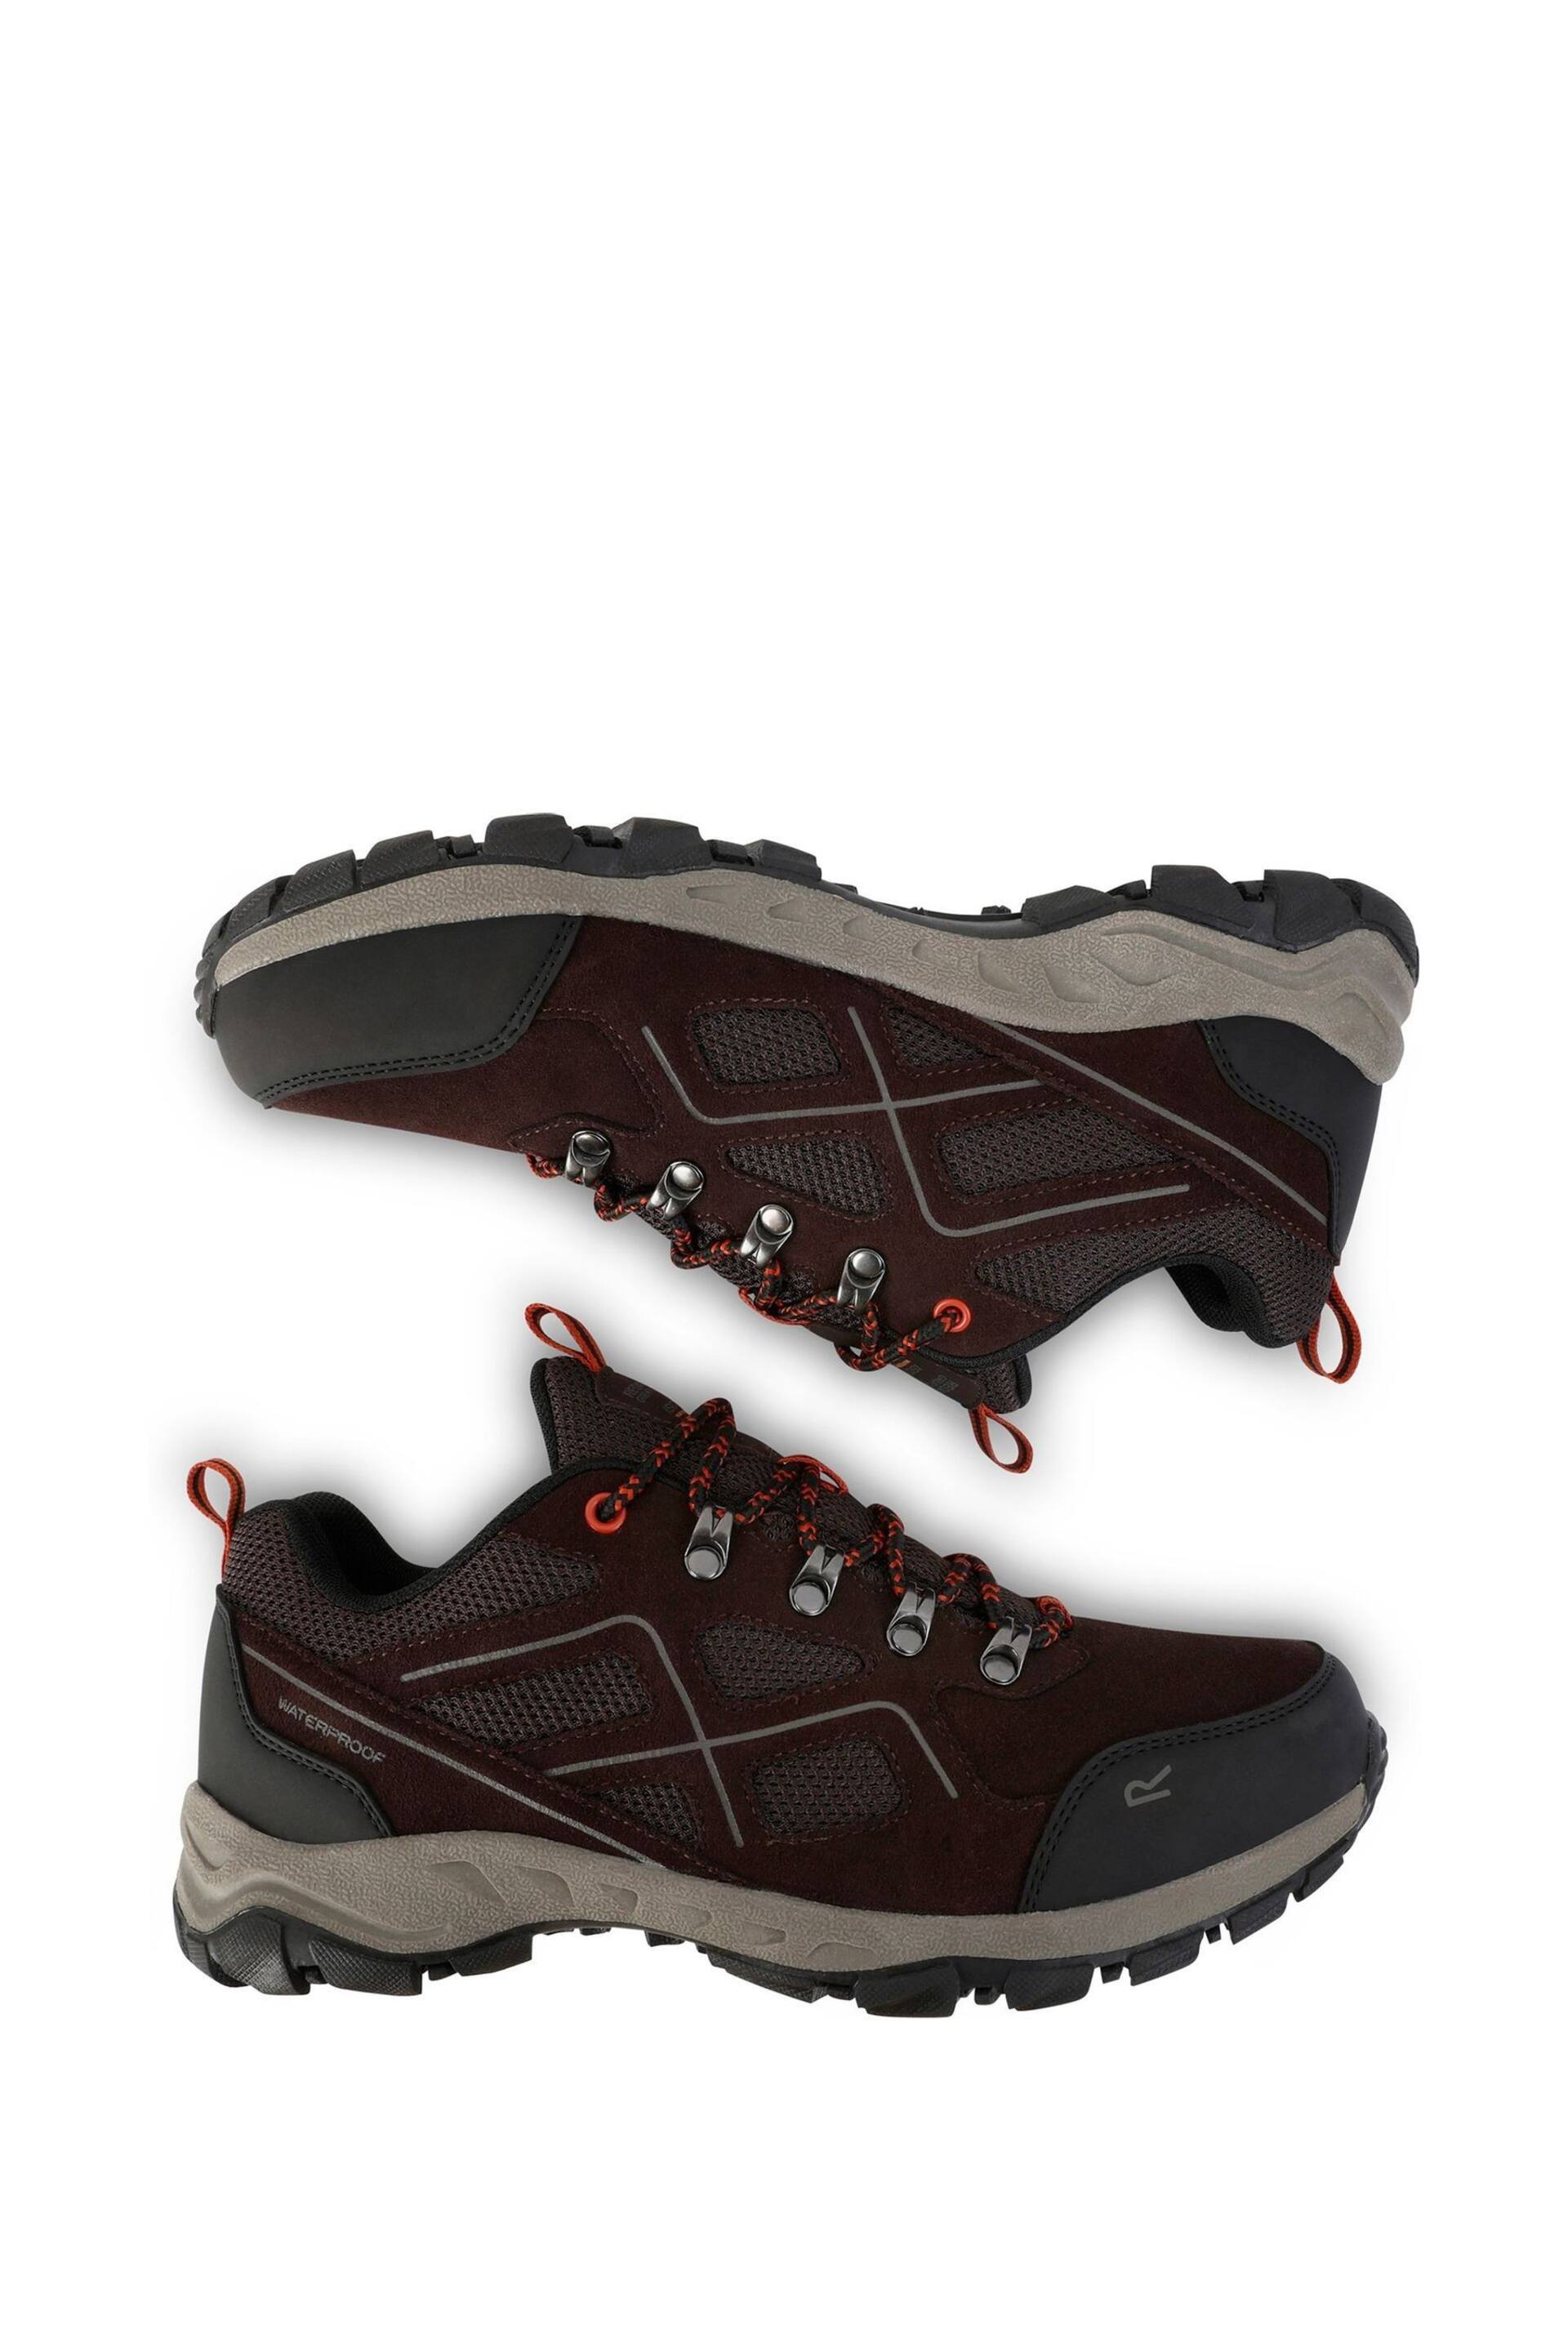 Regatta Brown Vendeavour Suede Waterproof Hiking Shoes - Image 4 of 8